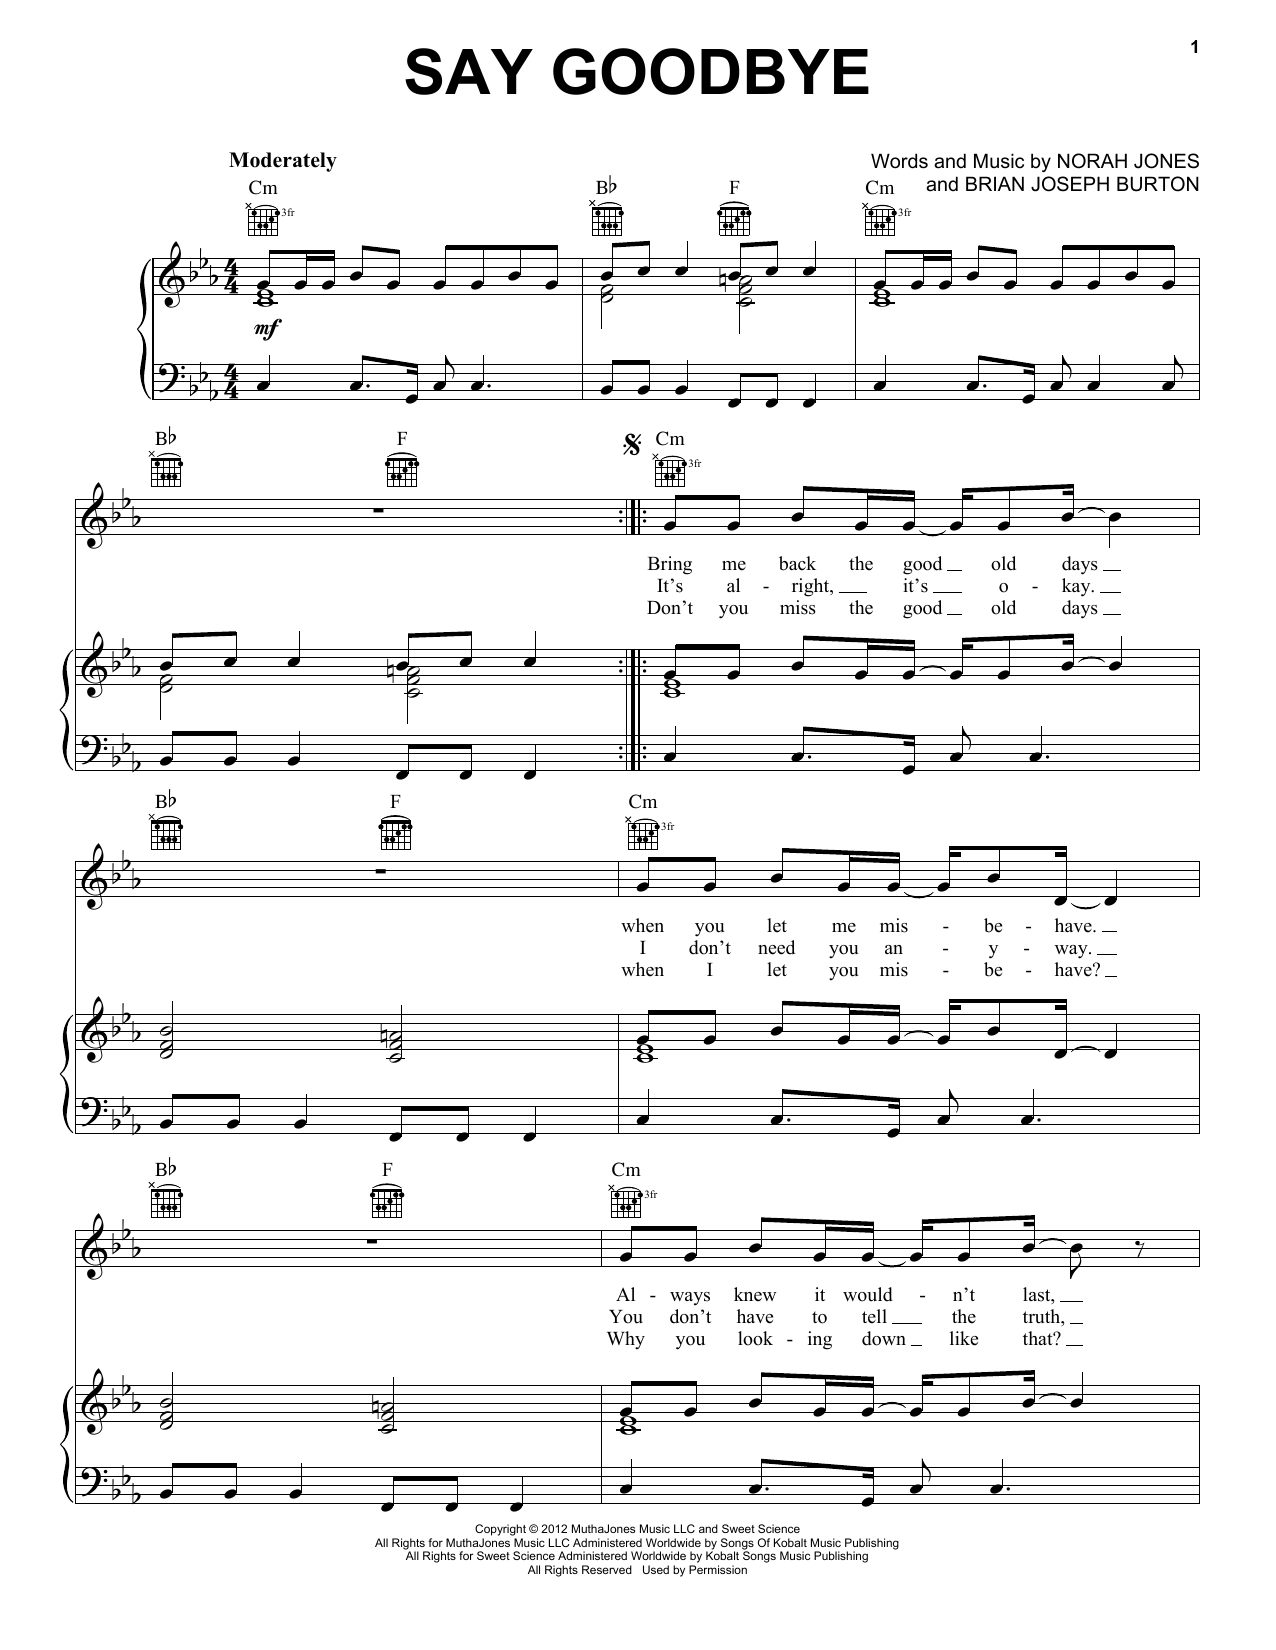 Norah Jones Say Goodbye Sheet Music Notes & Chords for Piano, Vocal & Guitar (Right-Hand Melody) - Download or Print PDF